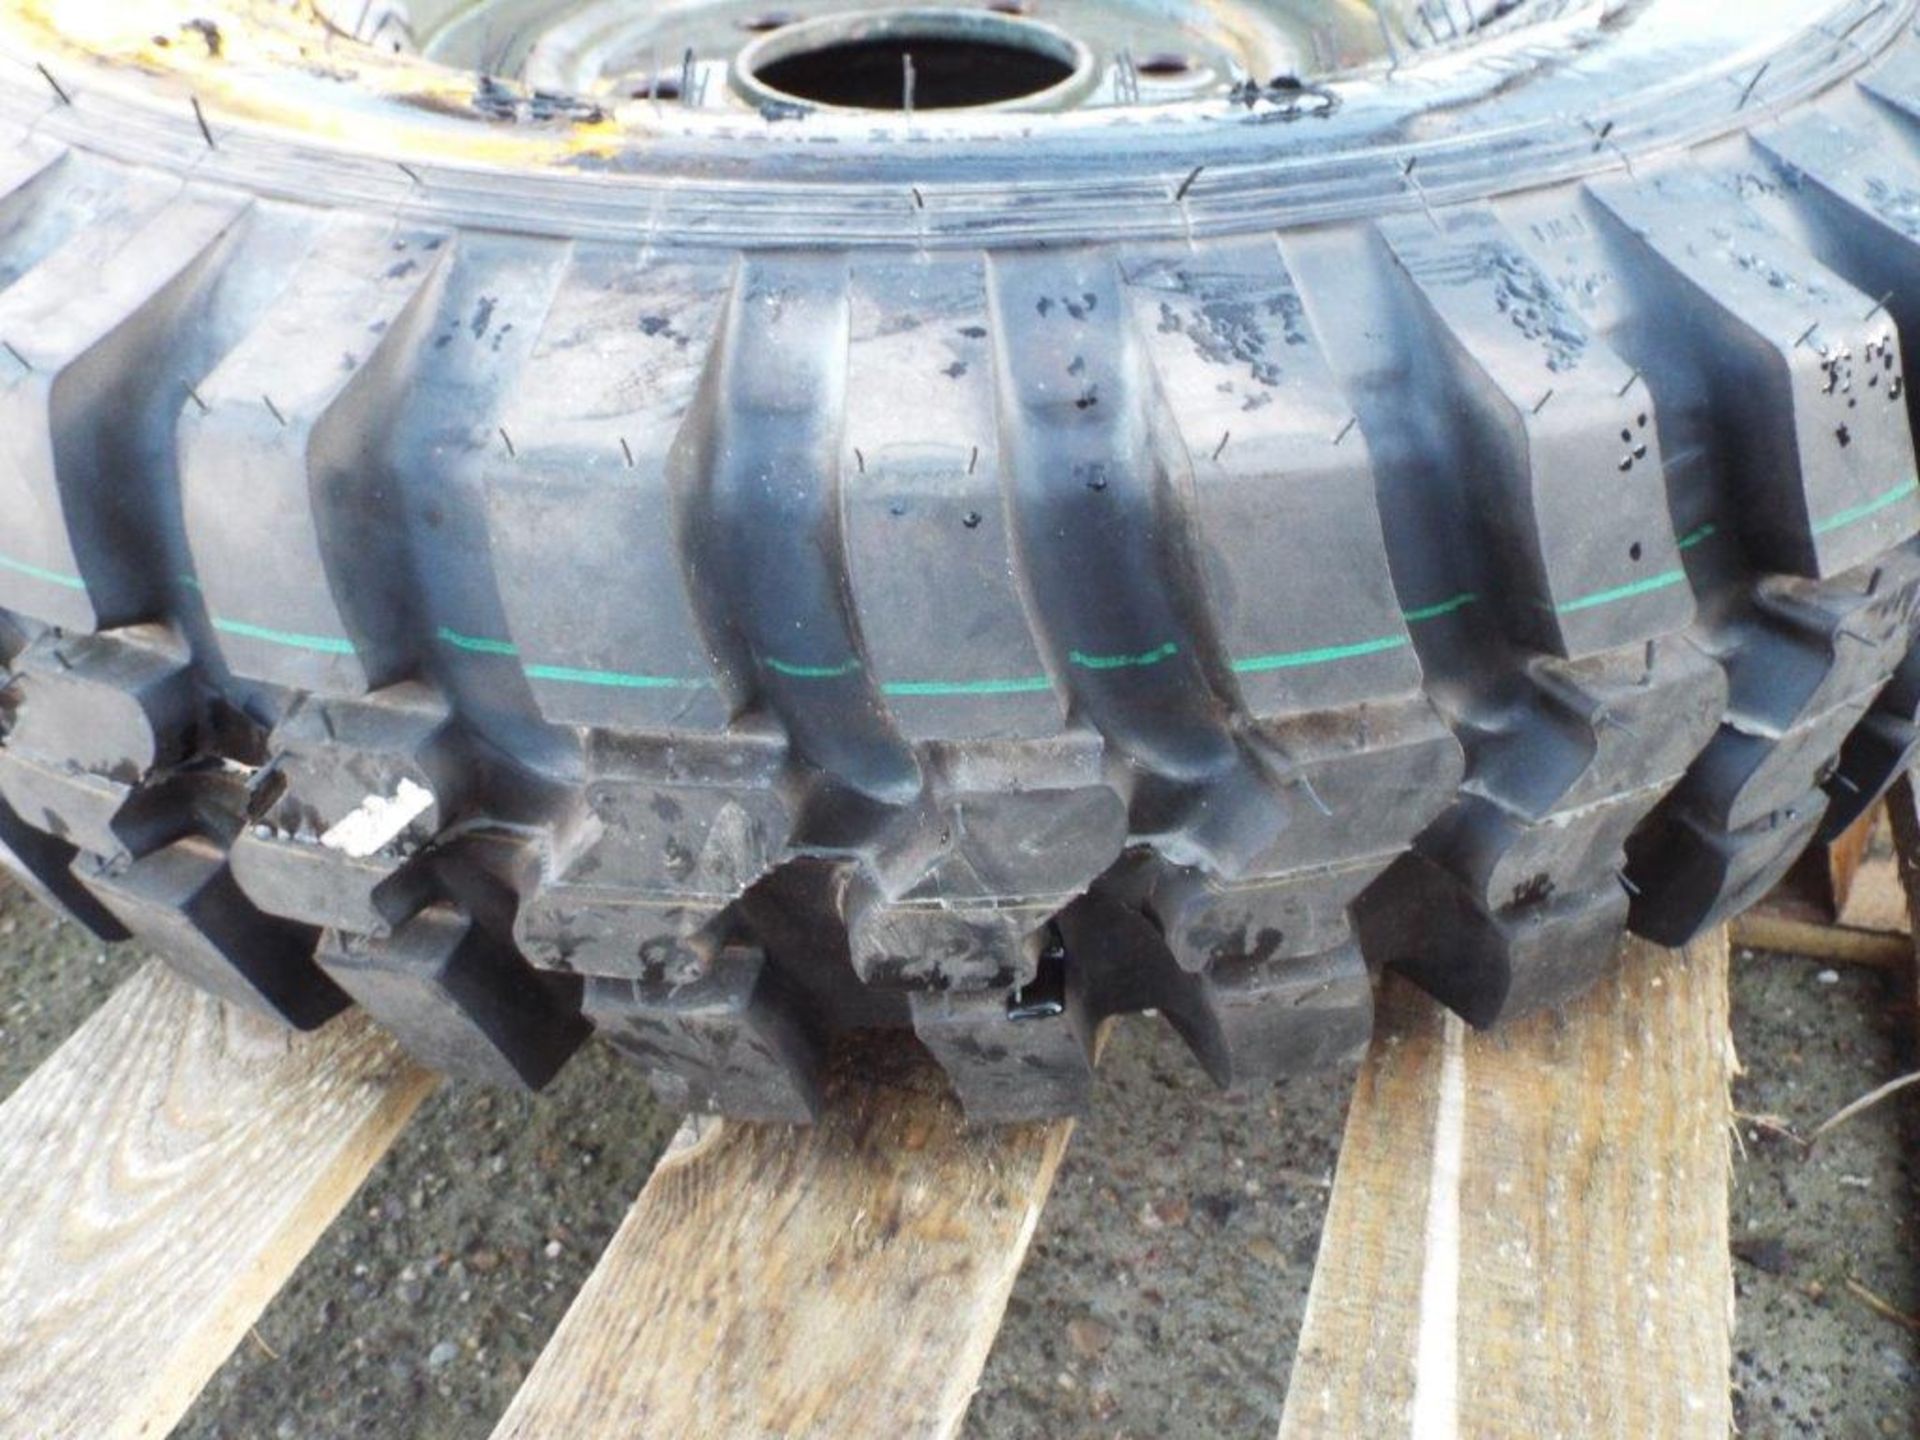 Petlas 9.00 x 16 Tyre complete with 5 stud rim - Image 8 of 9